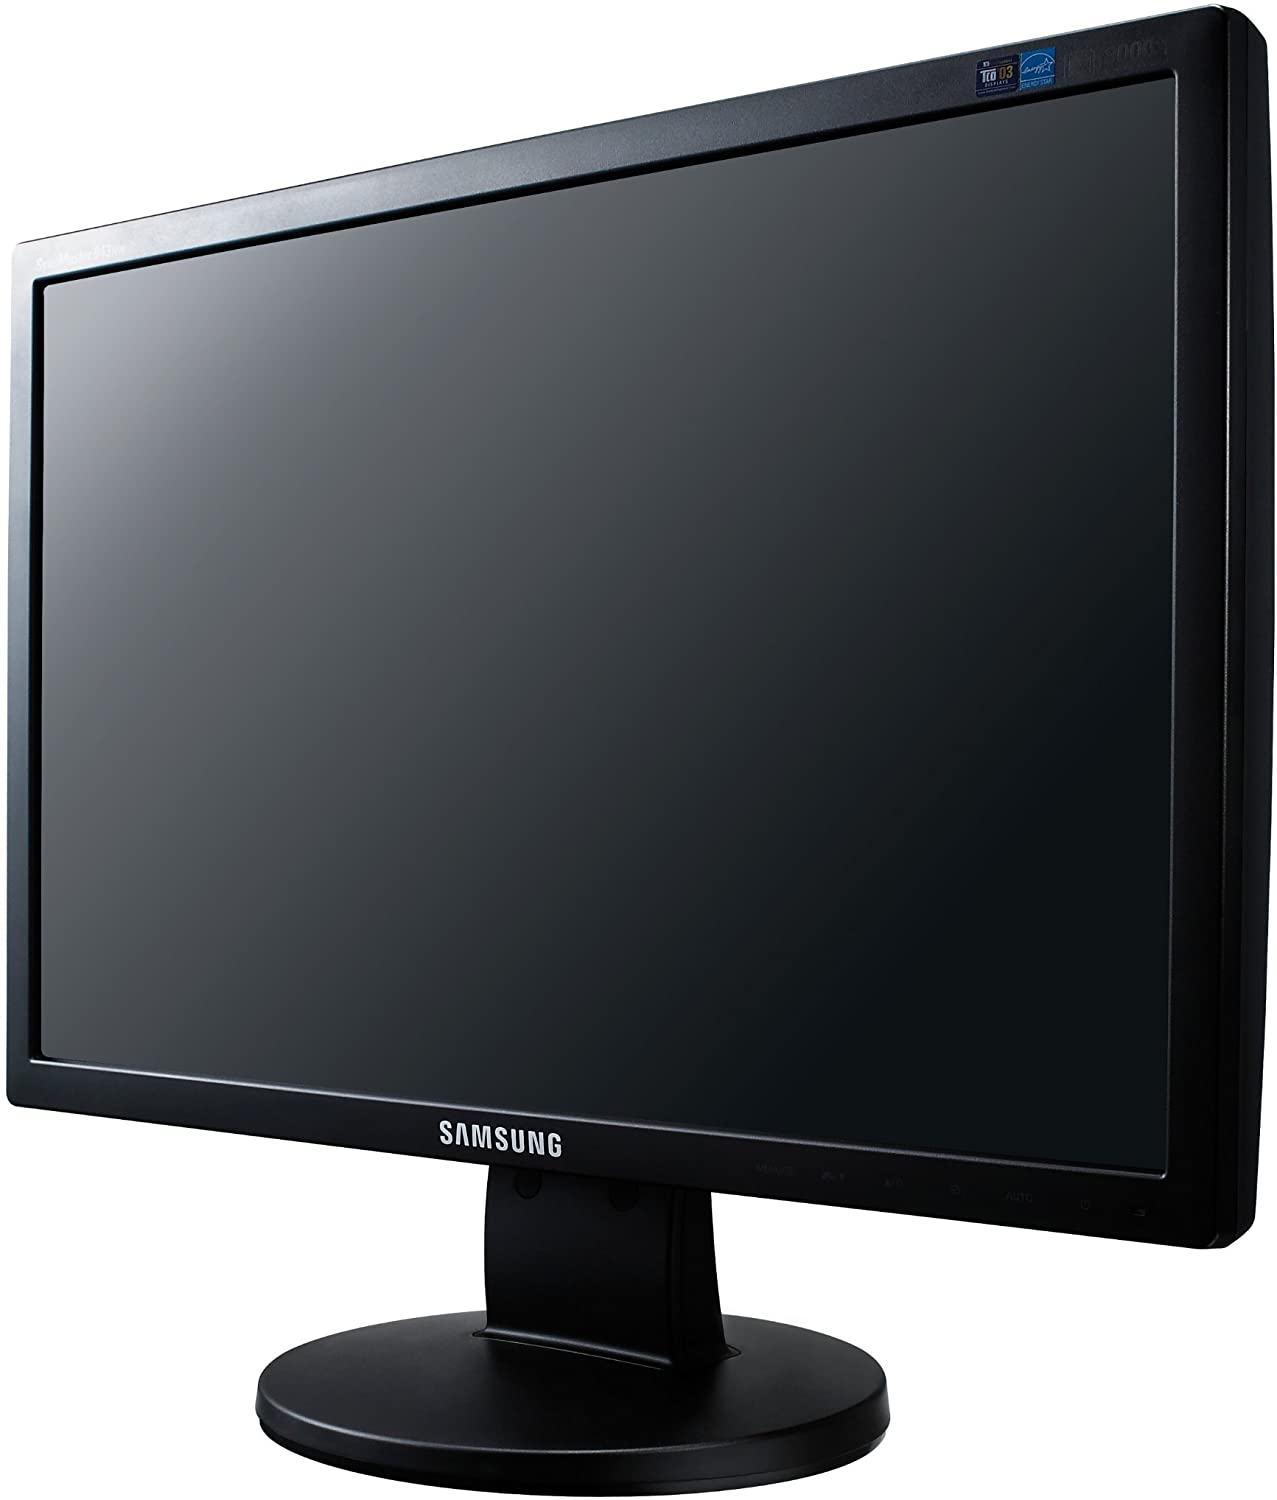 Samsung SyncMaster 943NW LCD Monitor 19